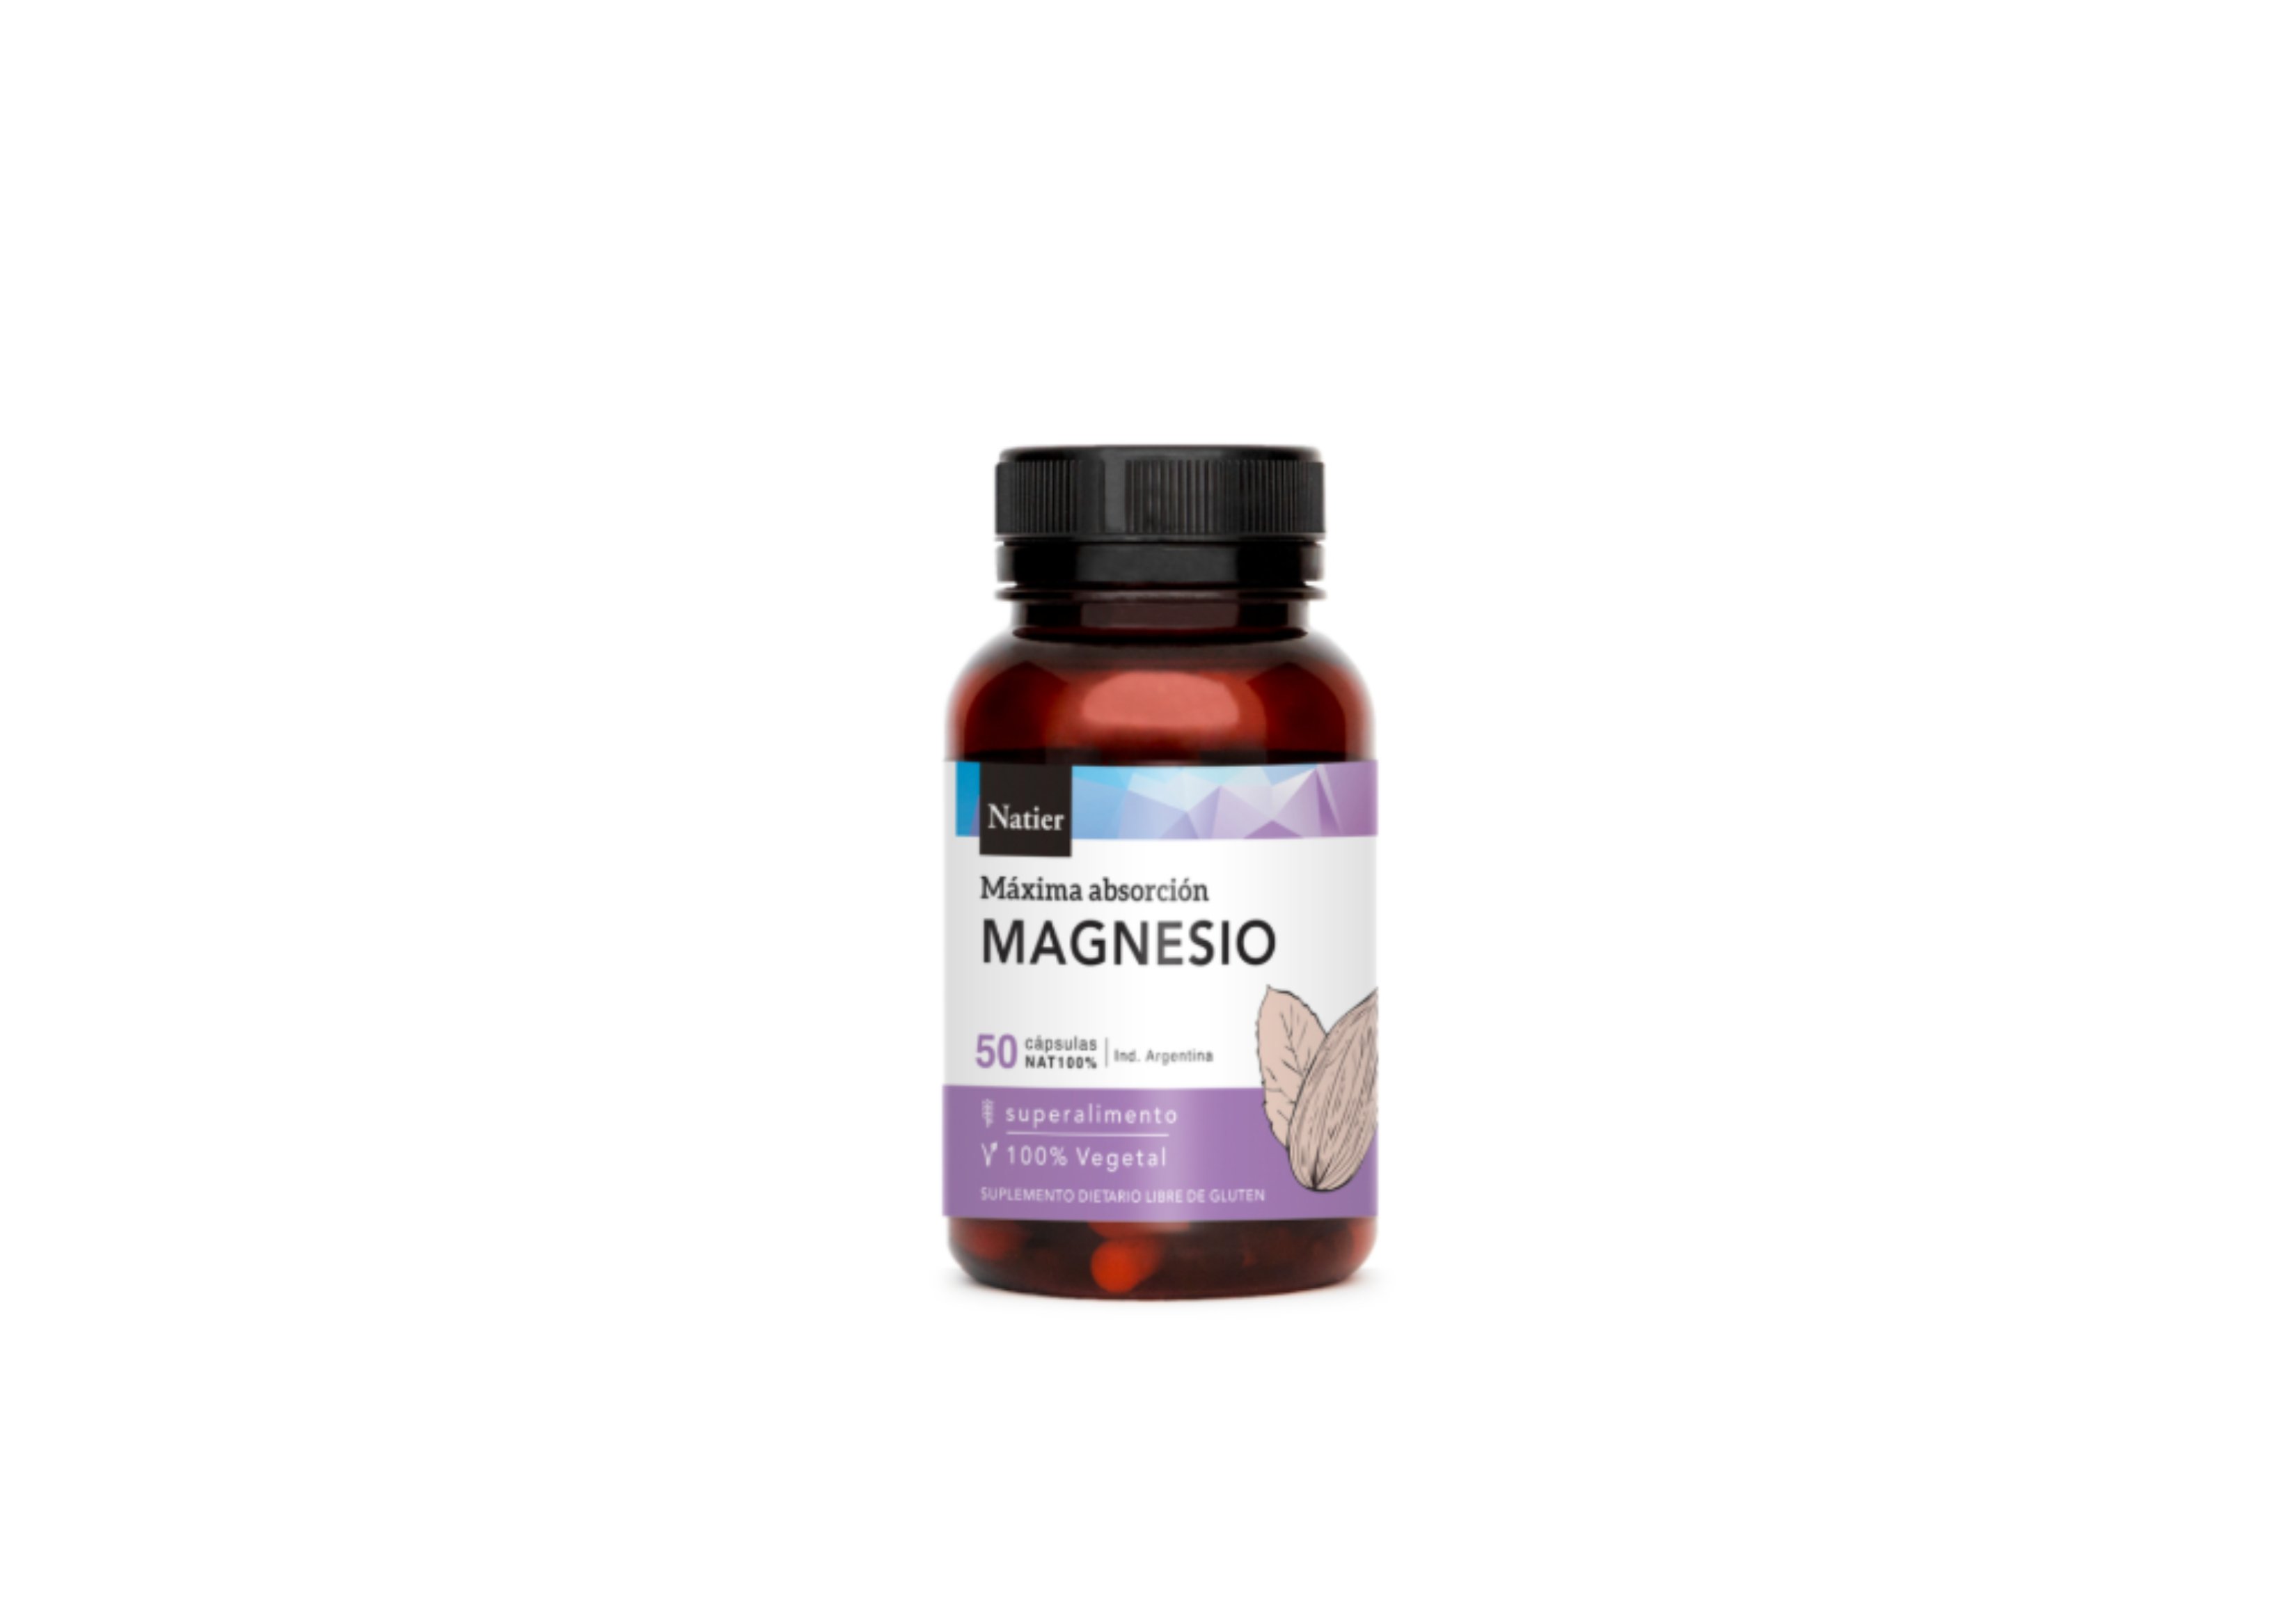 Suplement magnesi